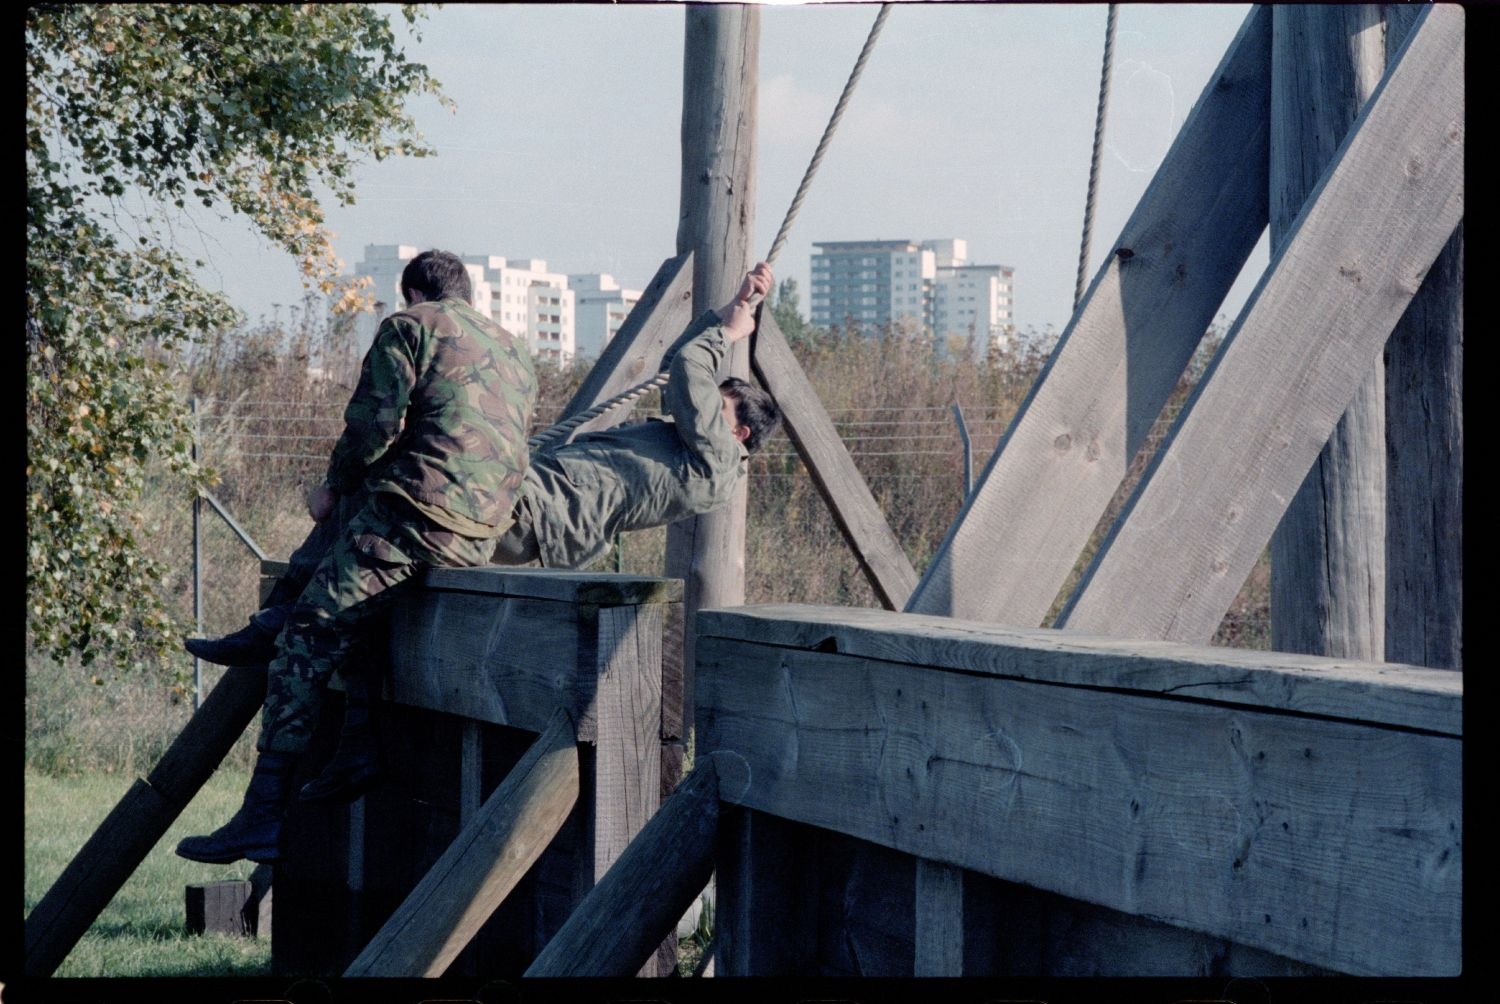 Fotografie: Rondo Fernmeldeübung auf dem Truppenübungsplatz Parks Range in Berlin-Lichterfelde (AlliiertenMuseum/U.S. Army Photograph Public Domain Mark)